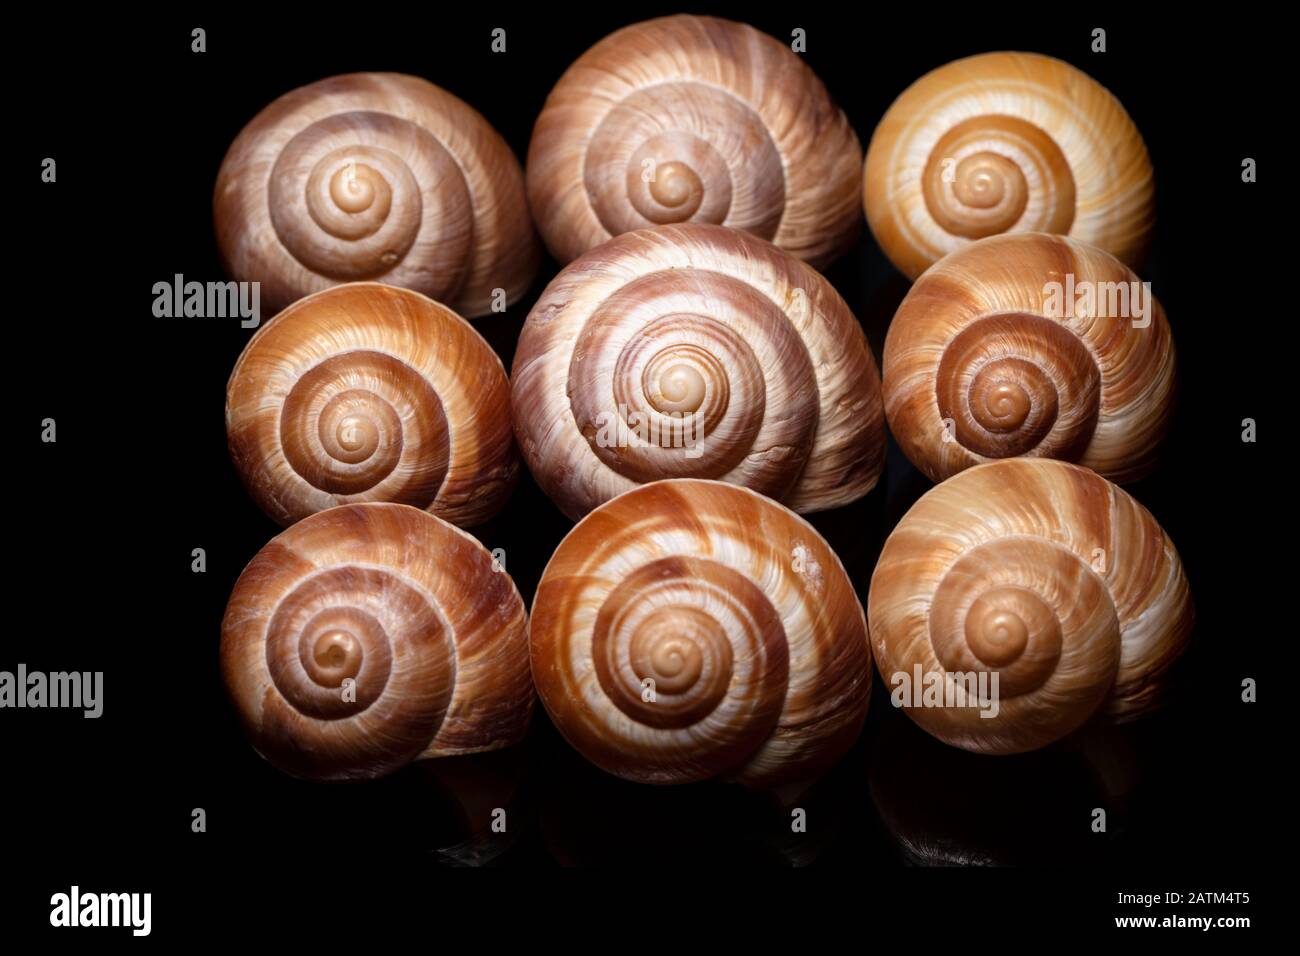 Close-up of decorative snail shells against black background - Brevard, North Carolina Stock Photo